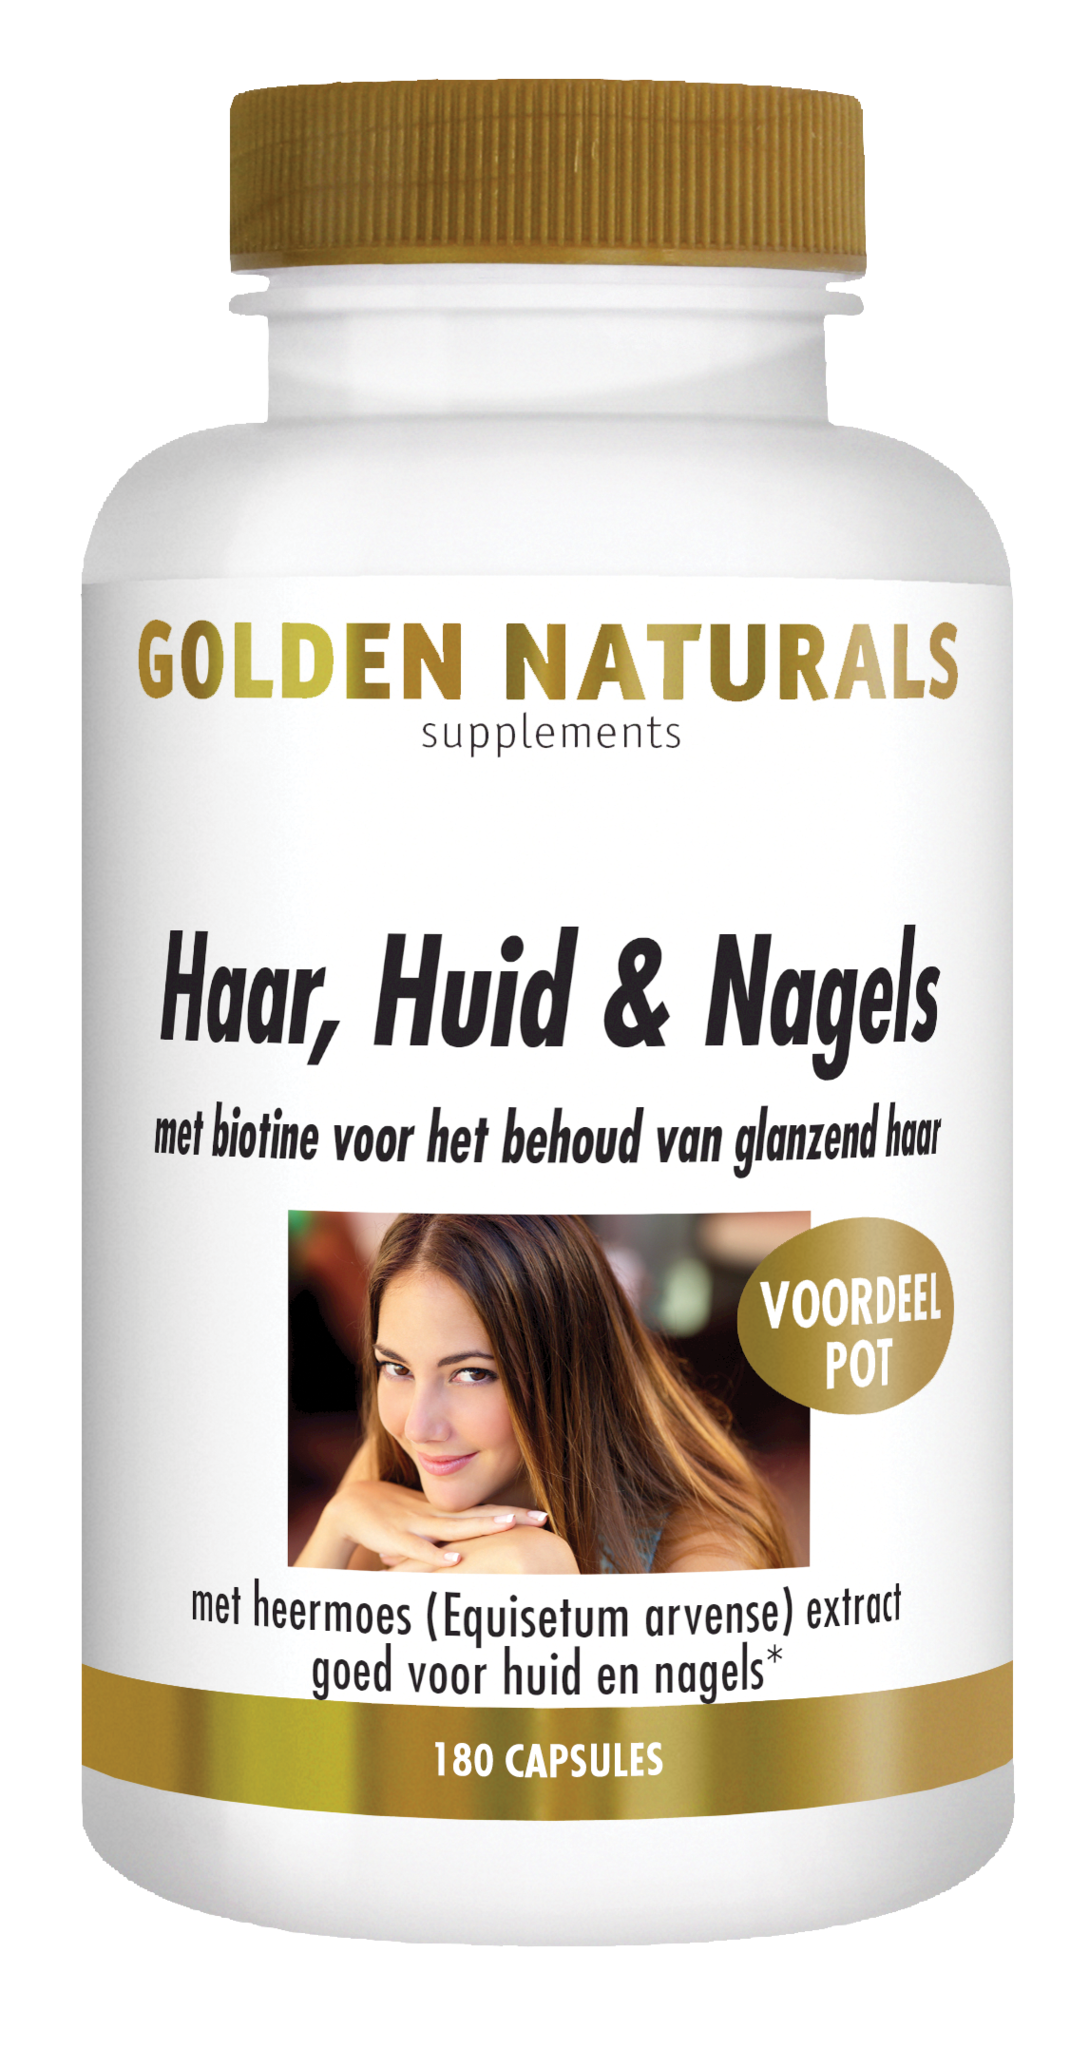 Golden Naturals Golden Naturals Haare, Haut und Nägel (180 Kapseln)